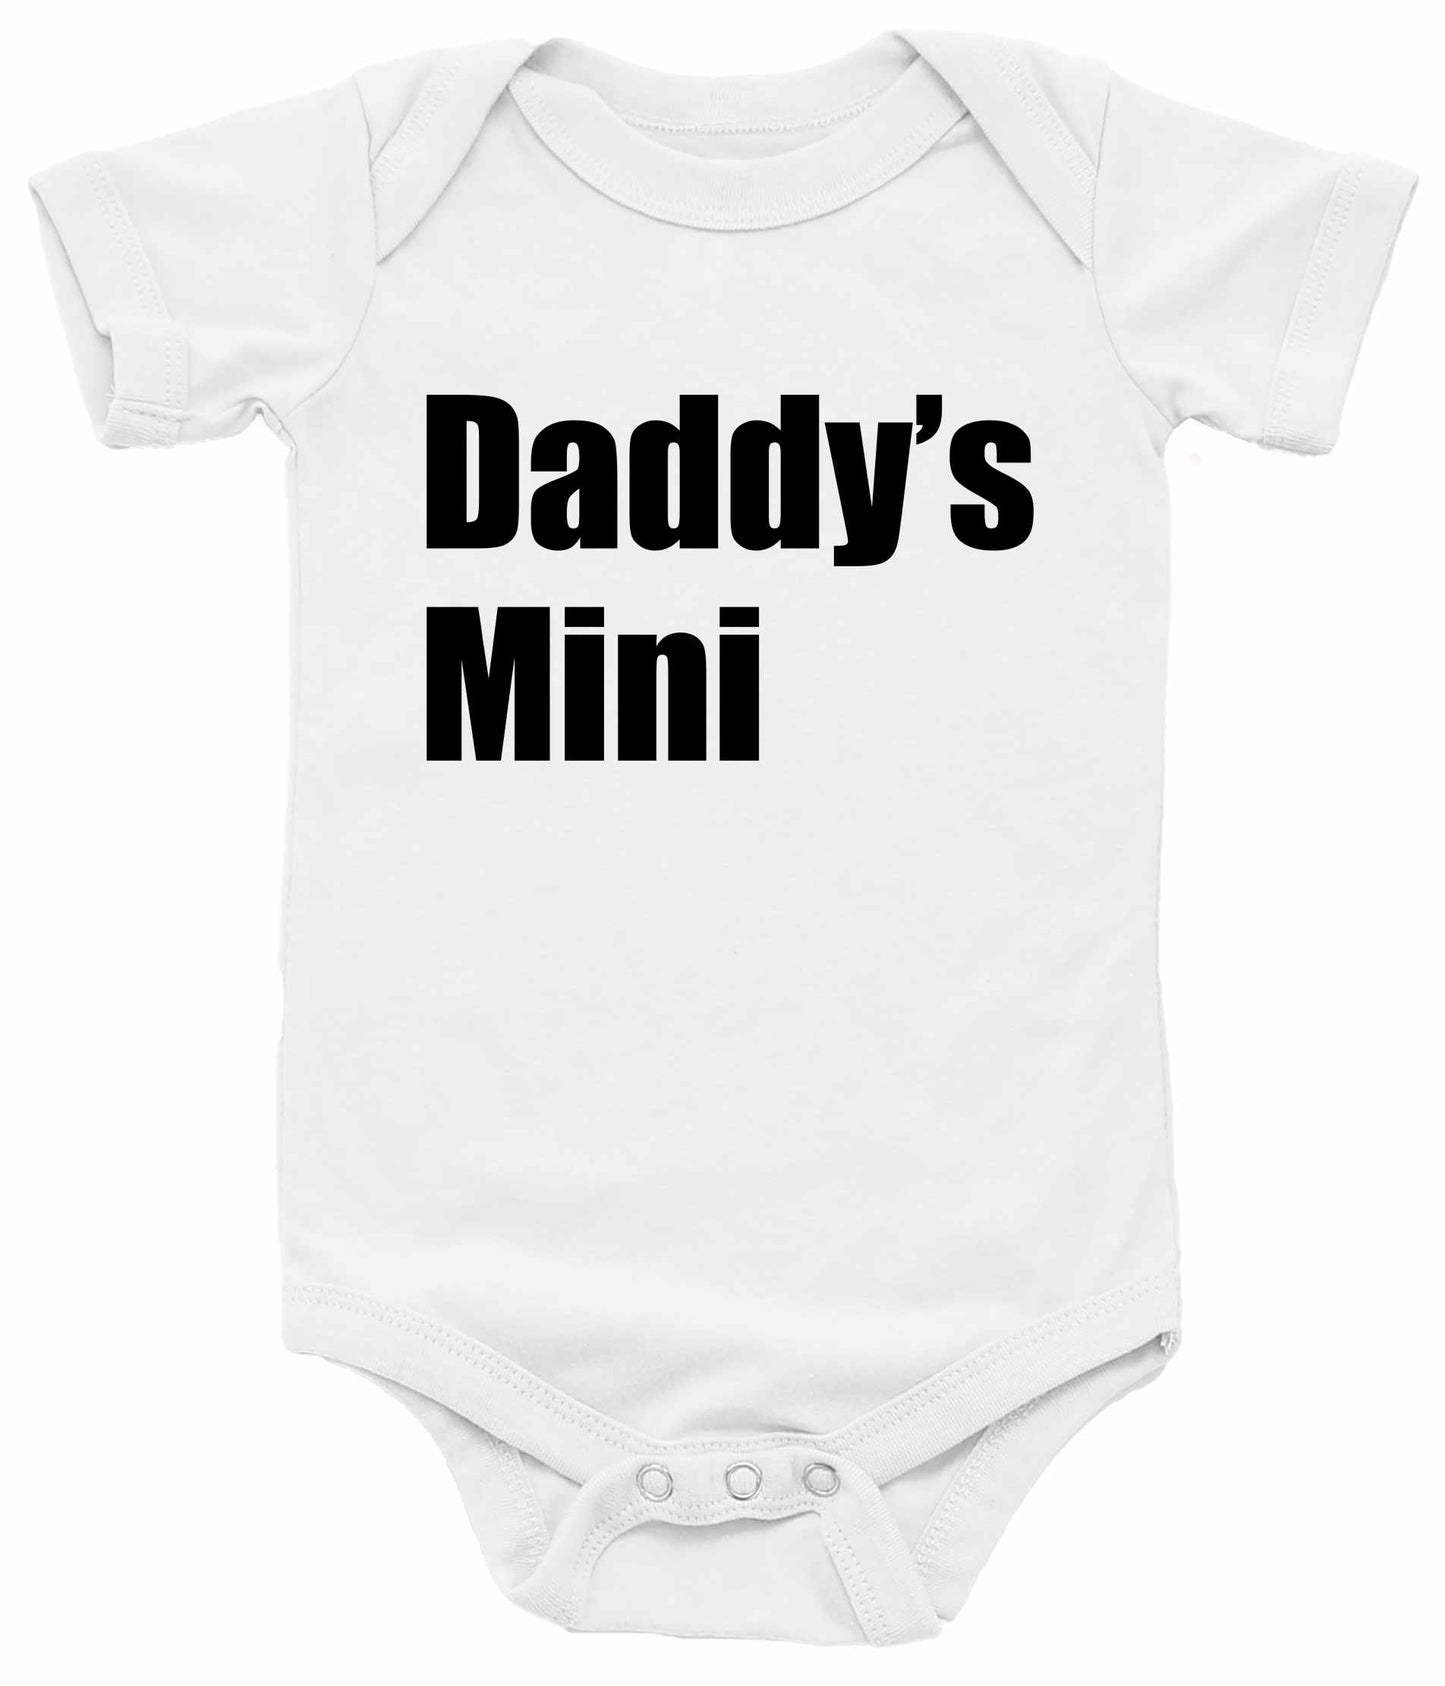 Daddy's Mini Infant BodySuit - White / NewBorn - White / 6 Month - White / 12 Month - White / 18 Month - White / 24 Month